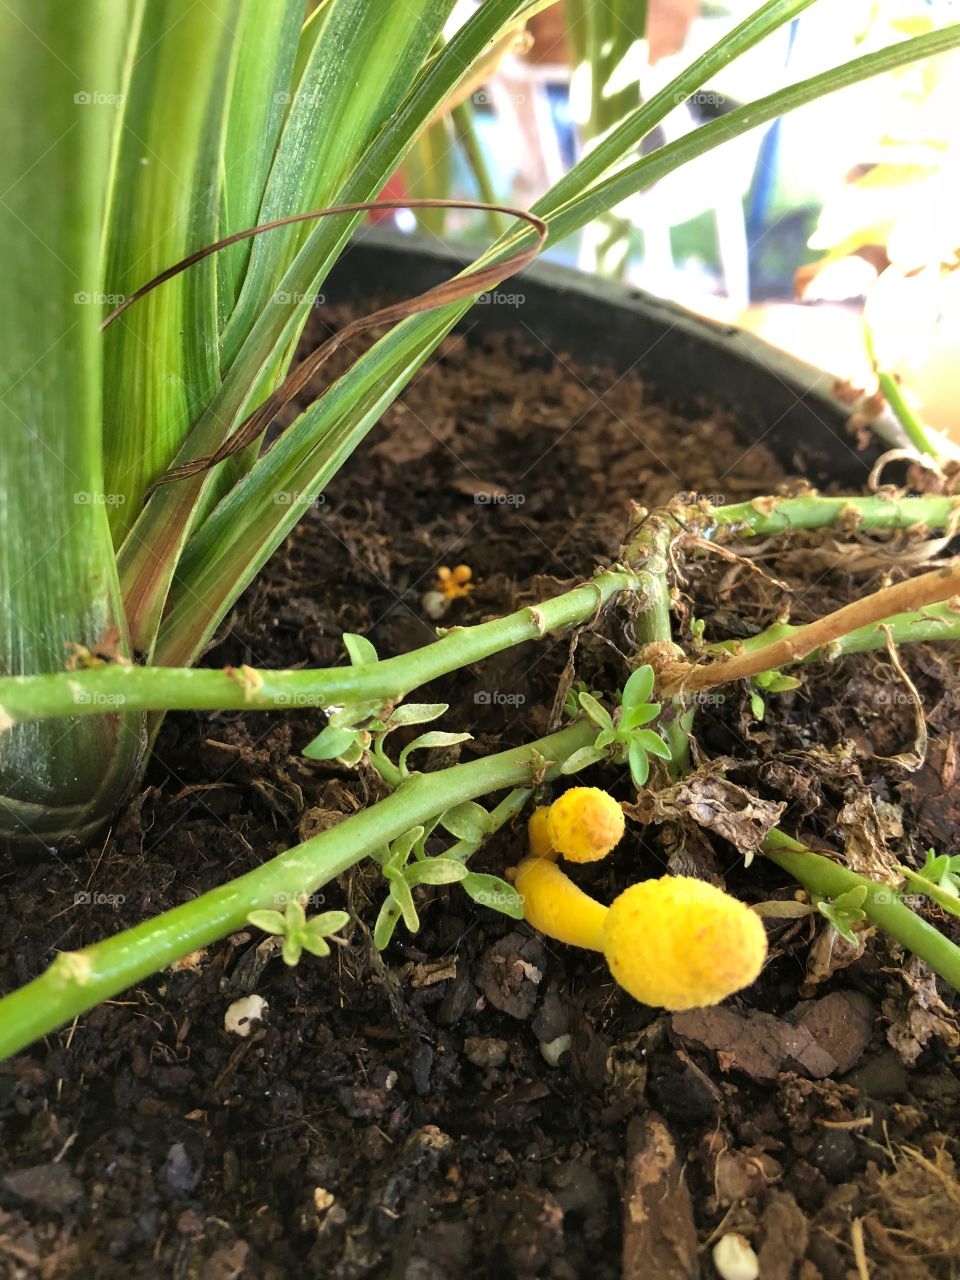 Tiny Yellow Mushrooms 